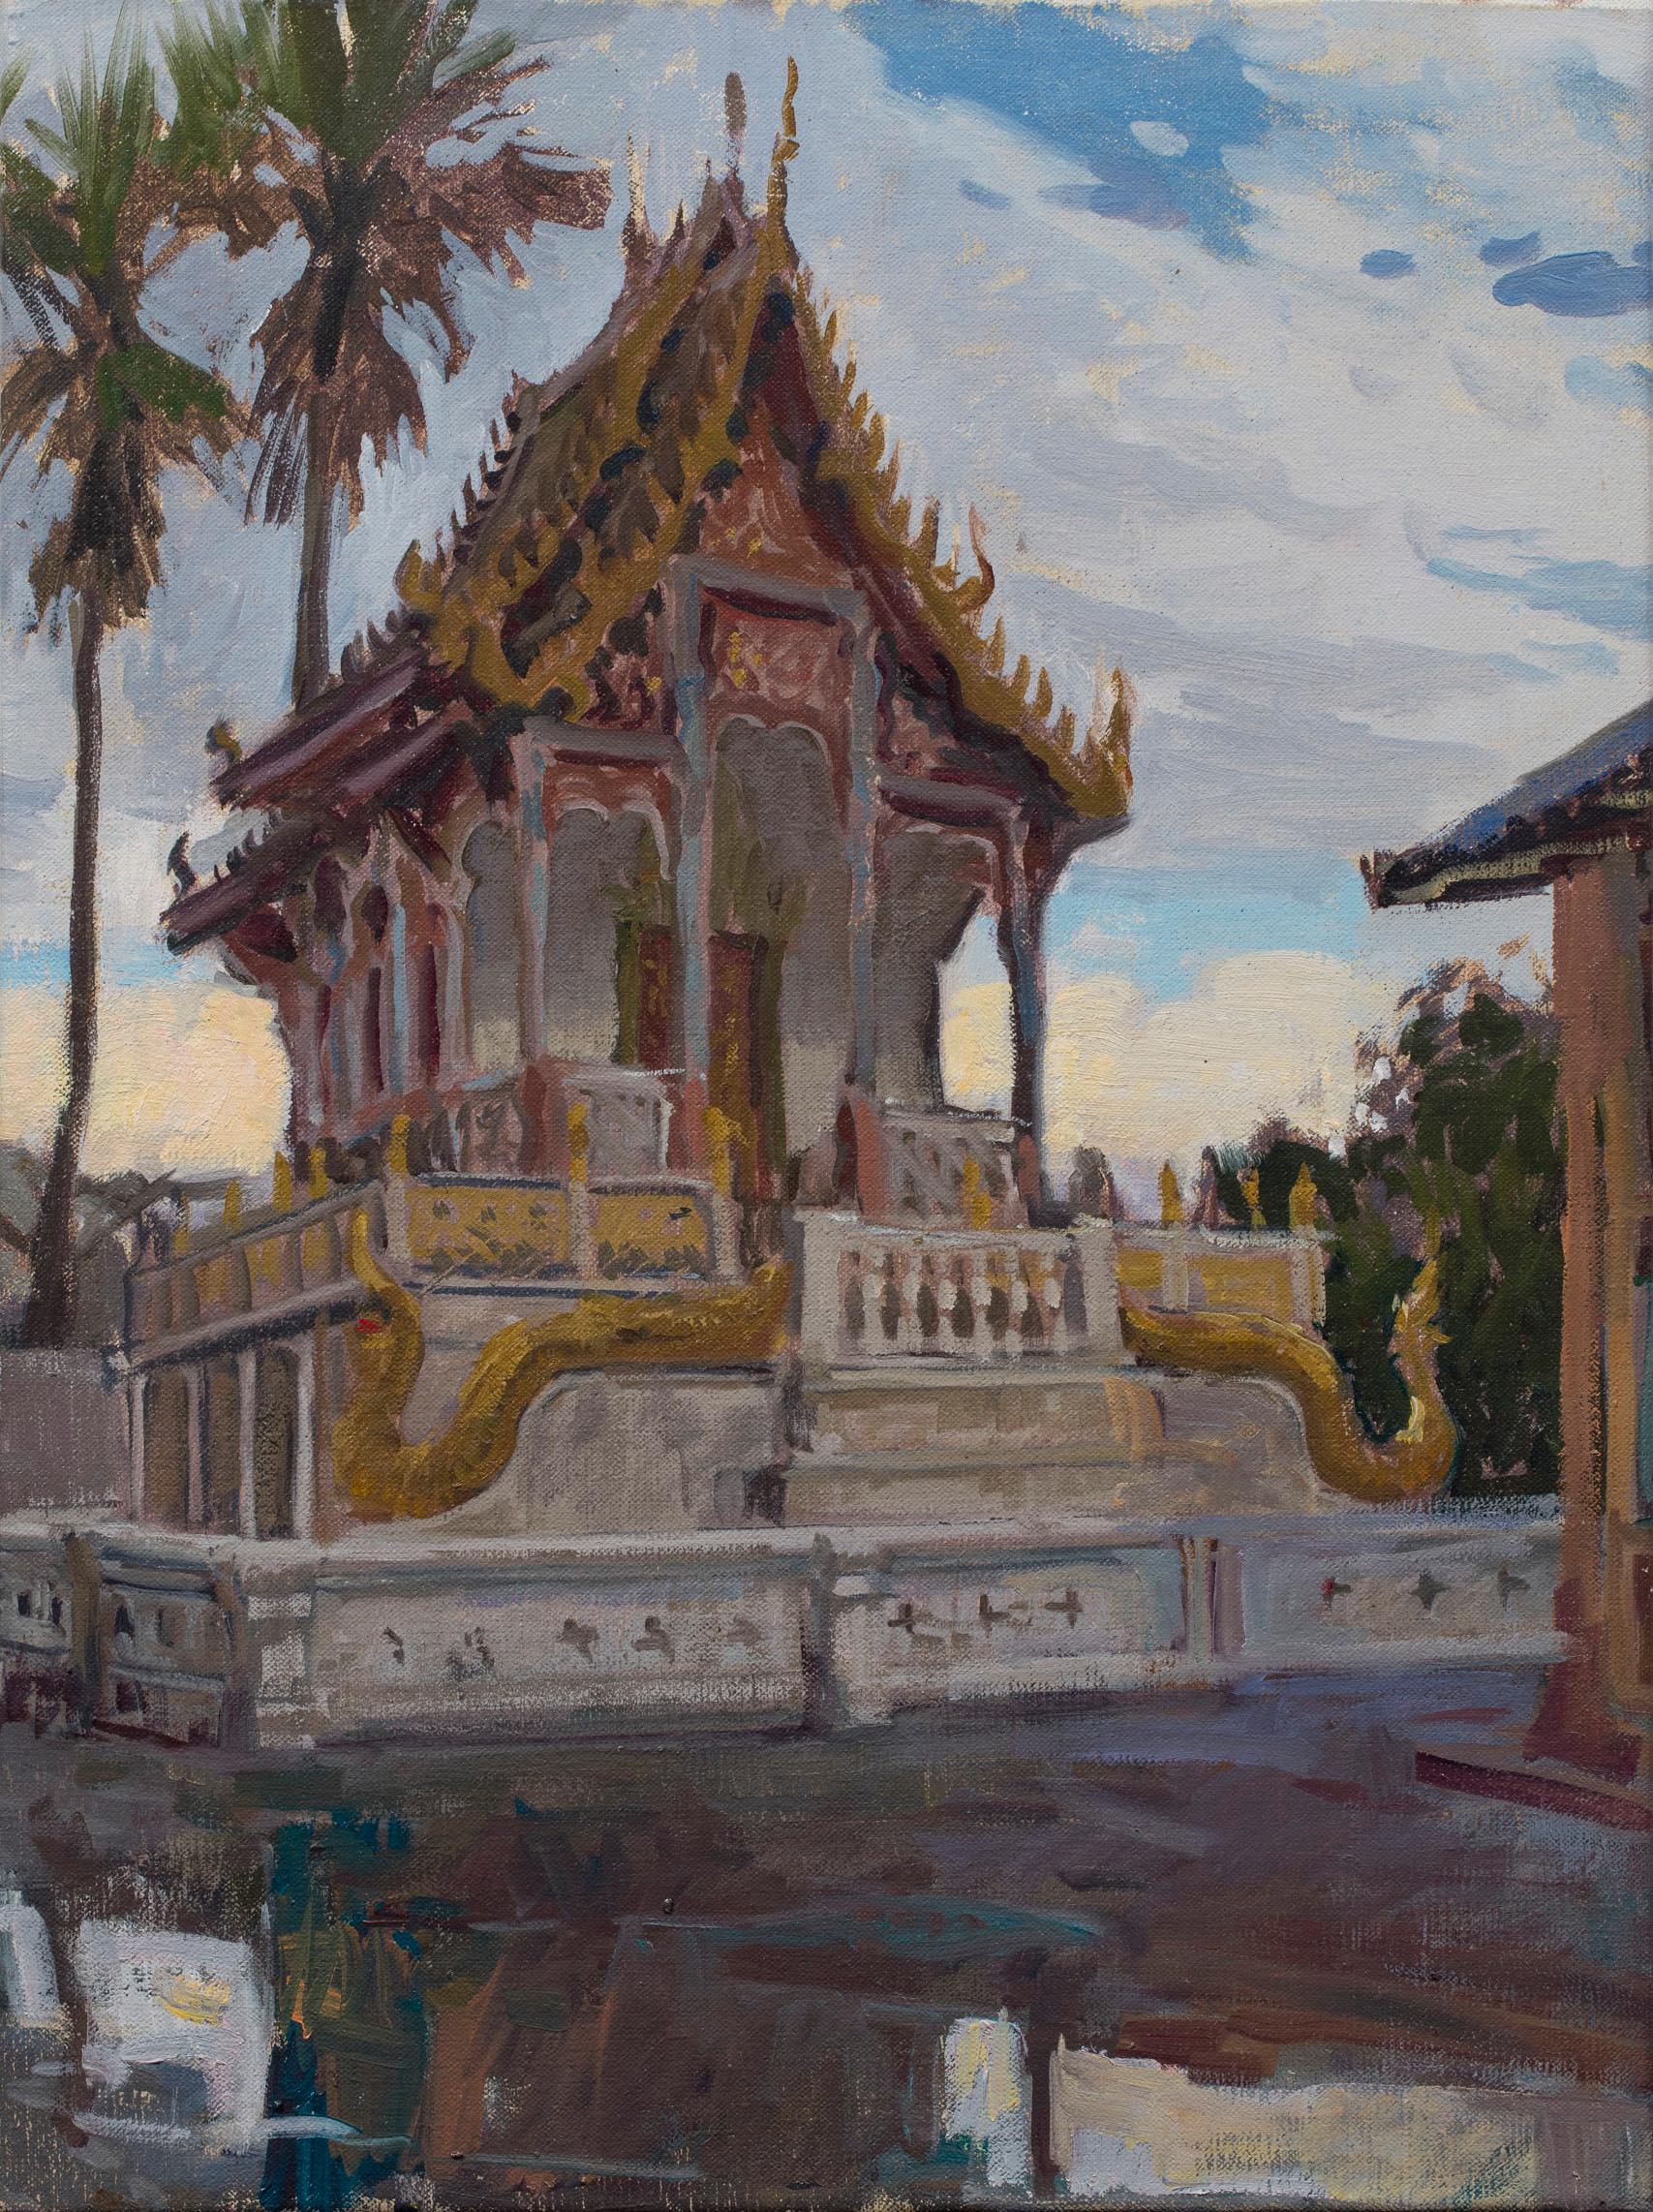 Daniela Astone Figurative Painting - Temple In Thailand